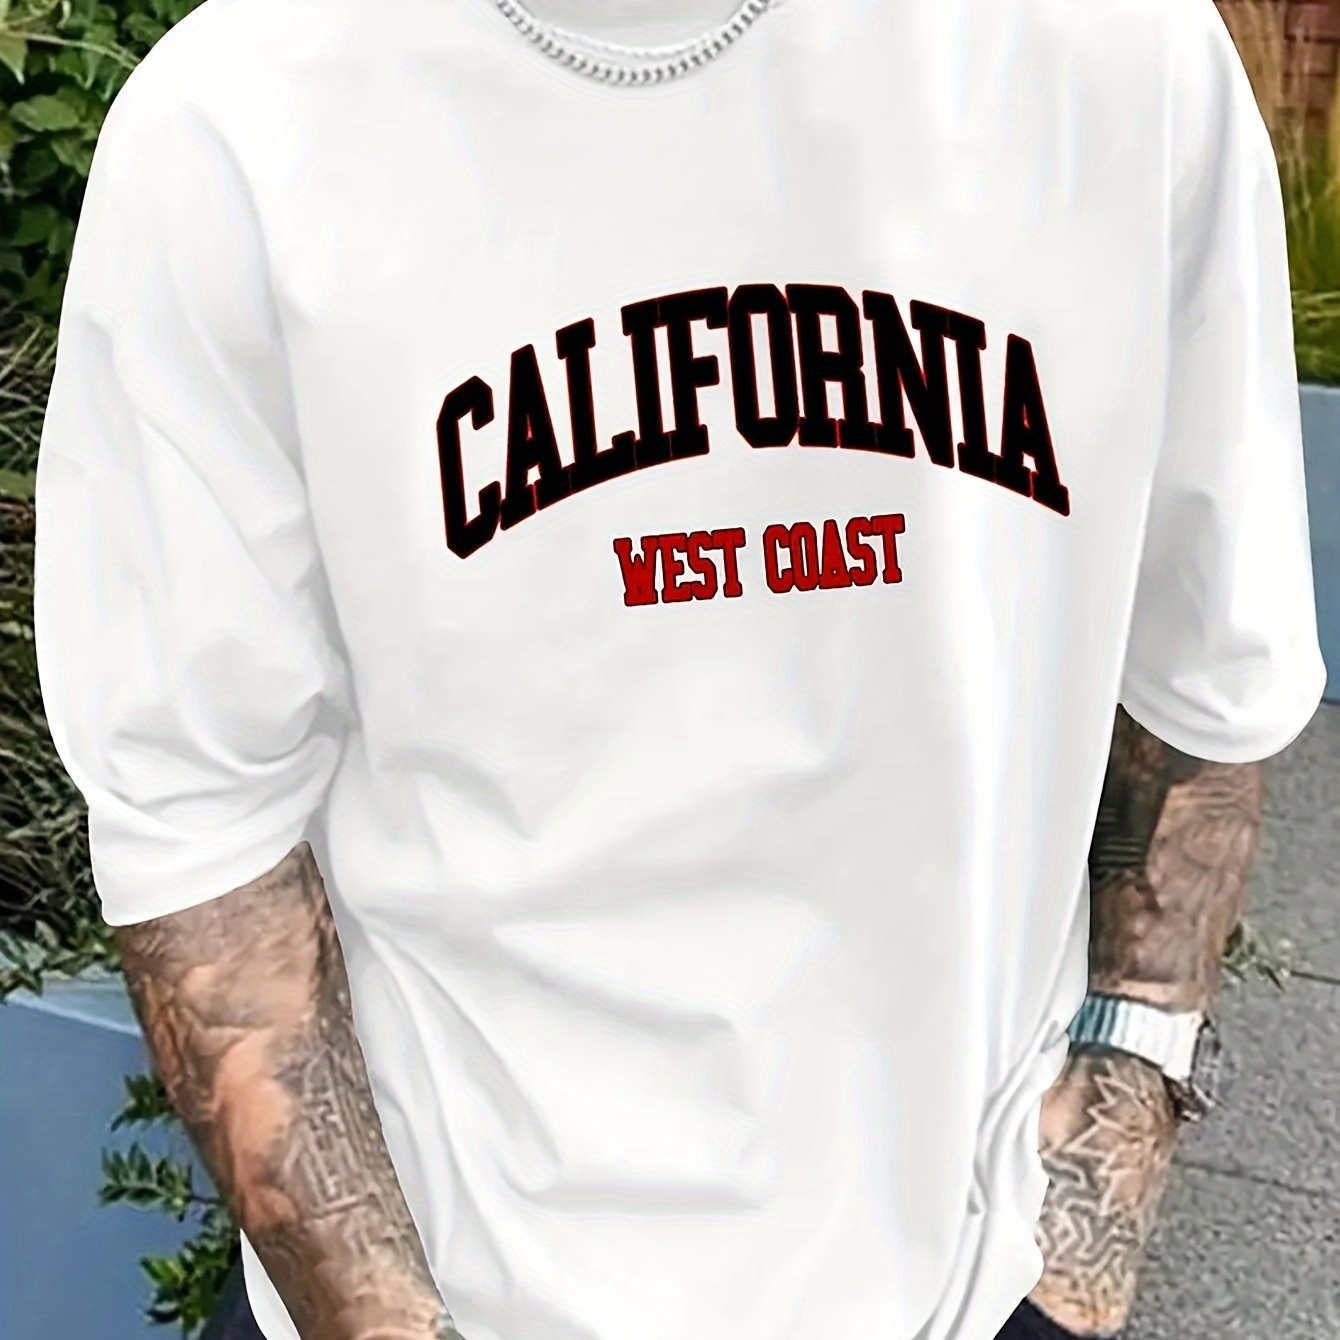 

California West Coast Print Tee Shirt, Tees For Men, Casual Short Sleeve T-shirt For Summer